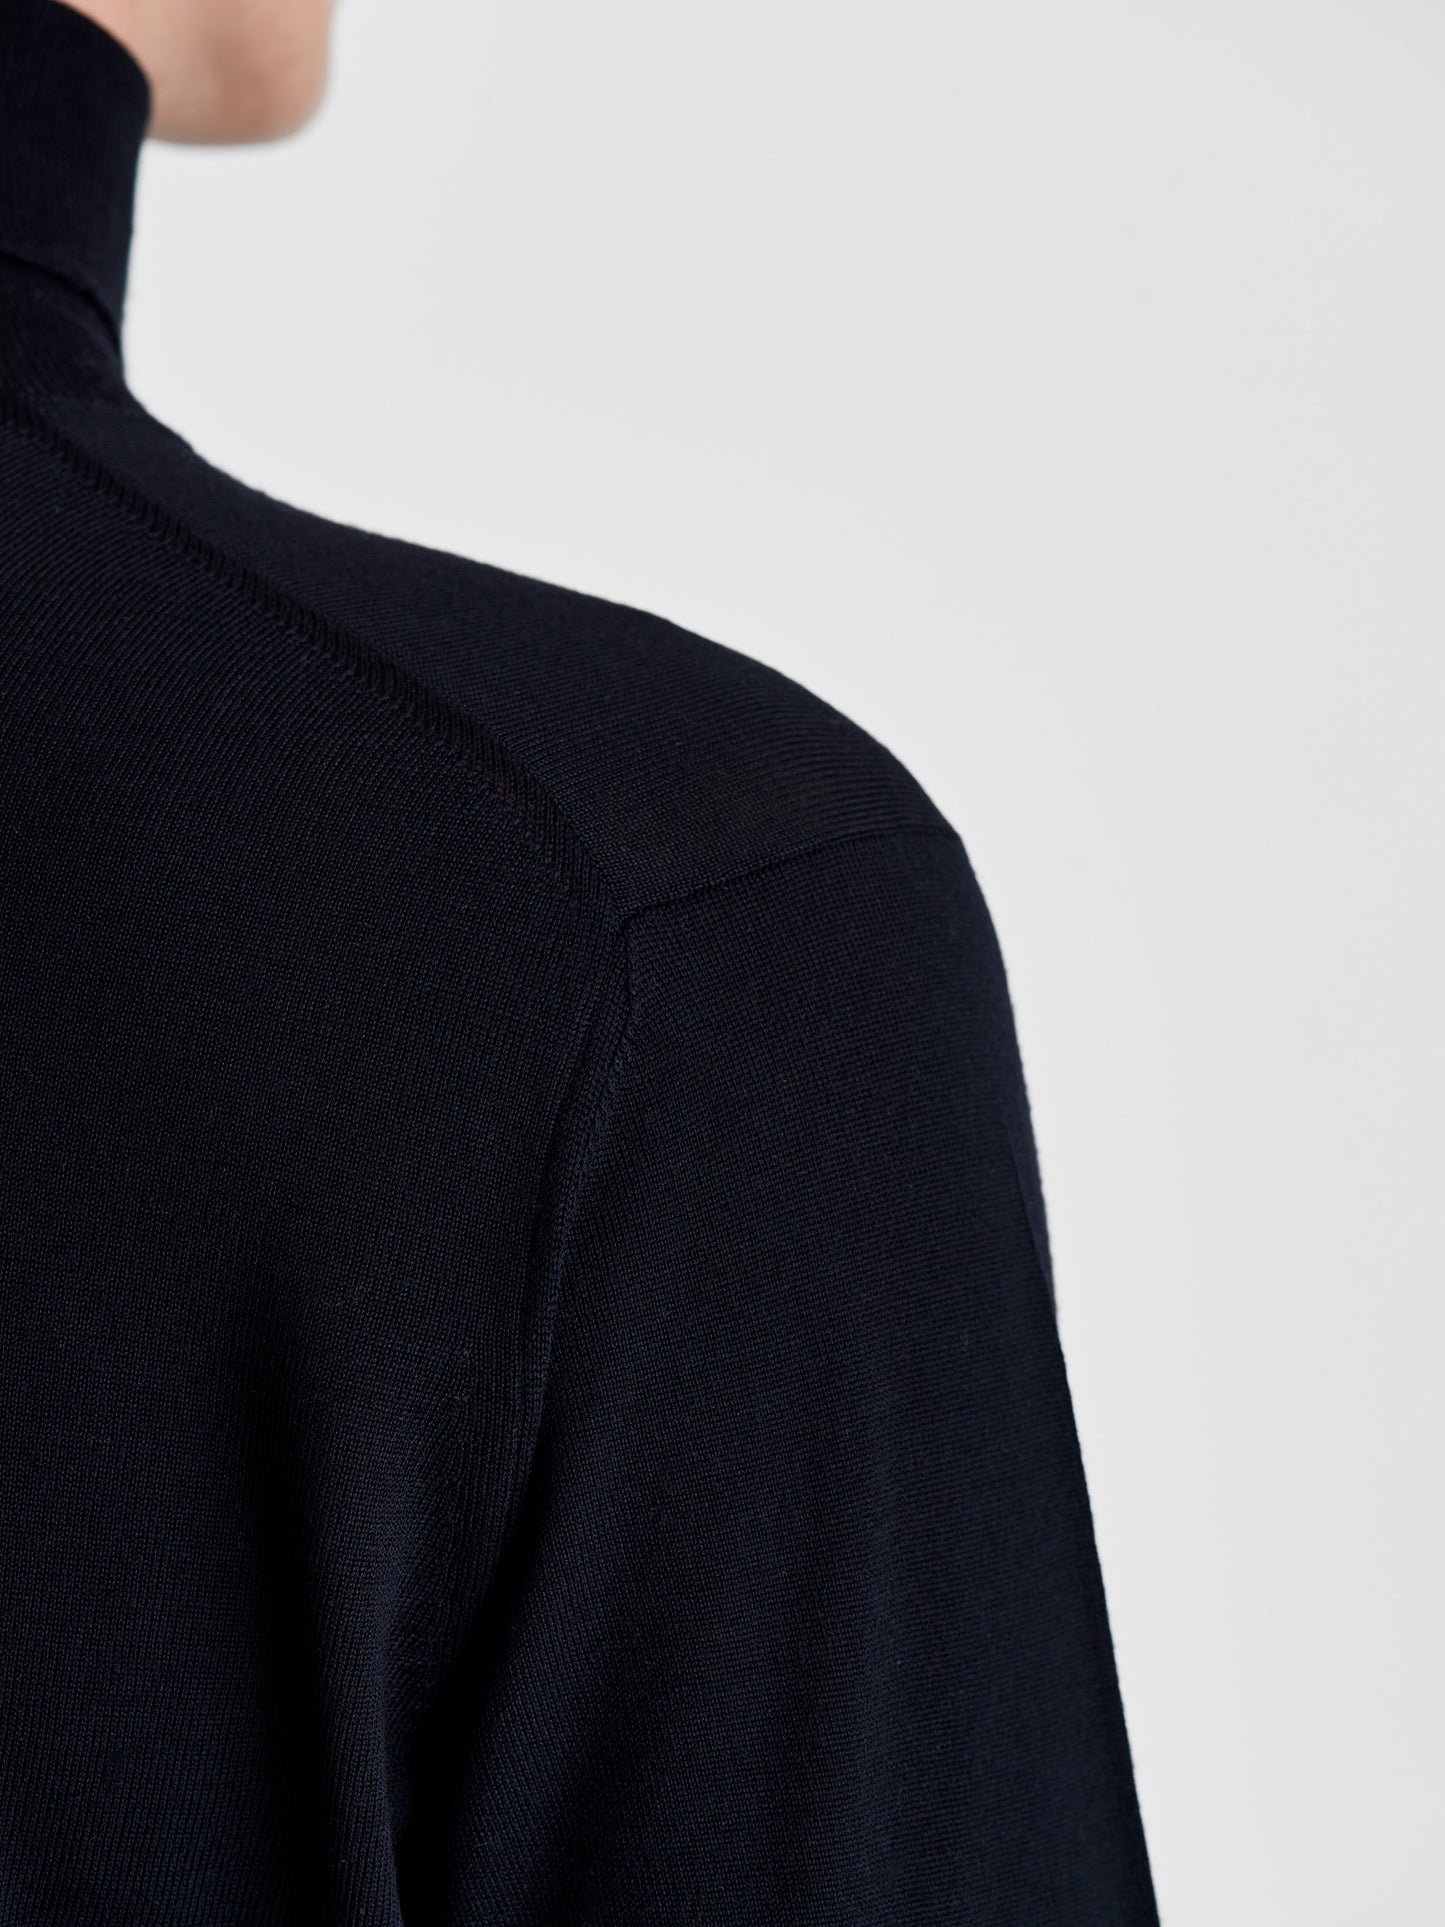 Merino Wool Extrafine Roll neck Sweater Navy Back Detail Model Image